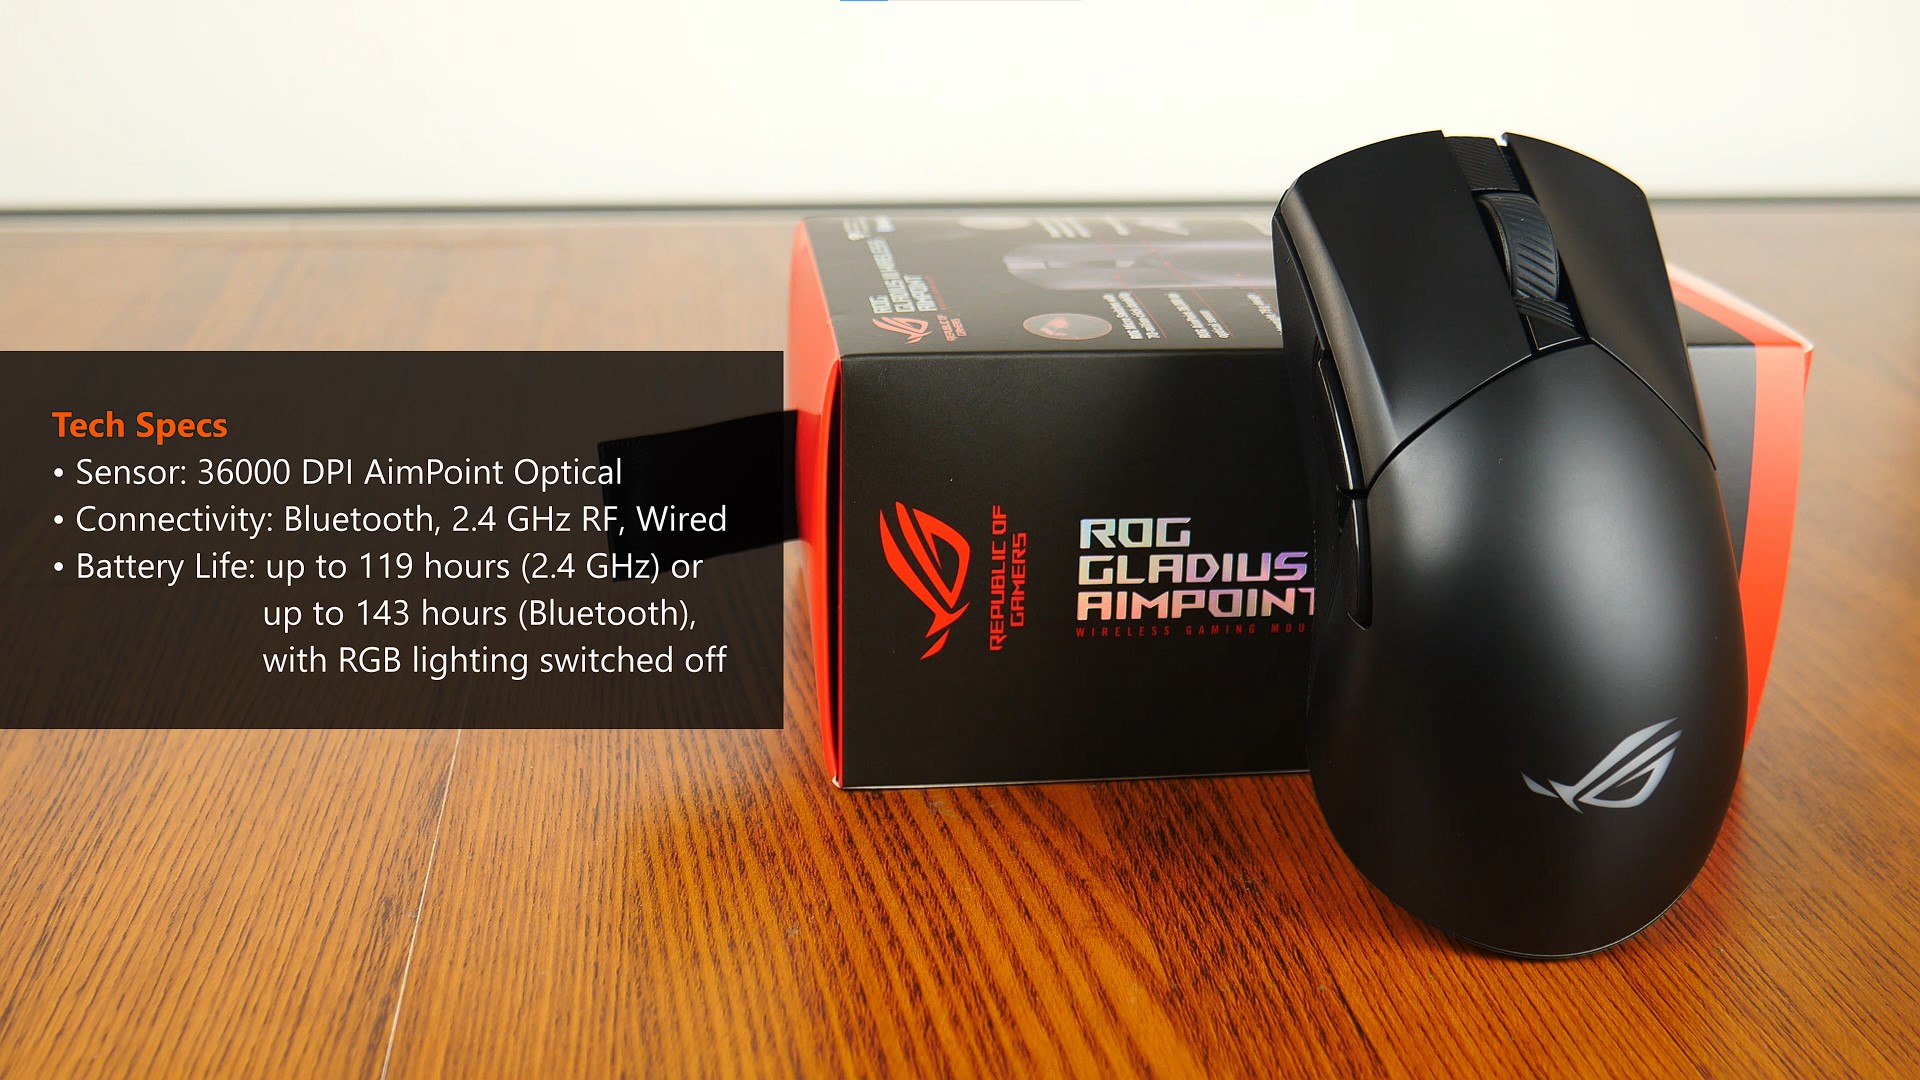 ROG Gladius III Wireless  Gaming mice-mouse-pads｜ROG - Republic of Gamers｜ROG  USA